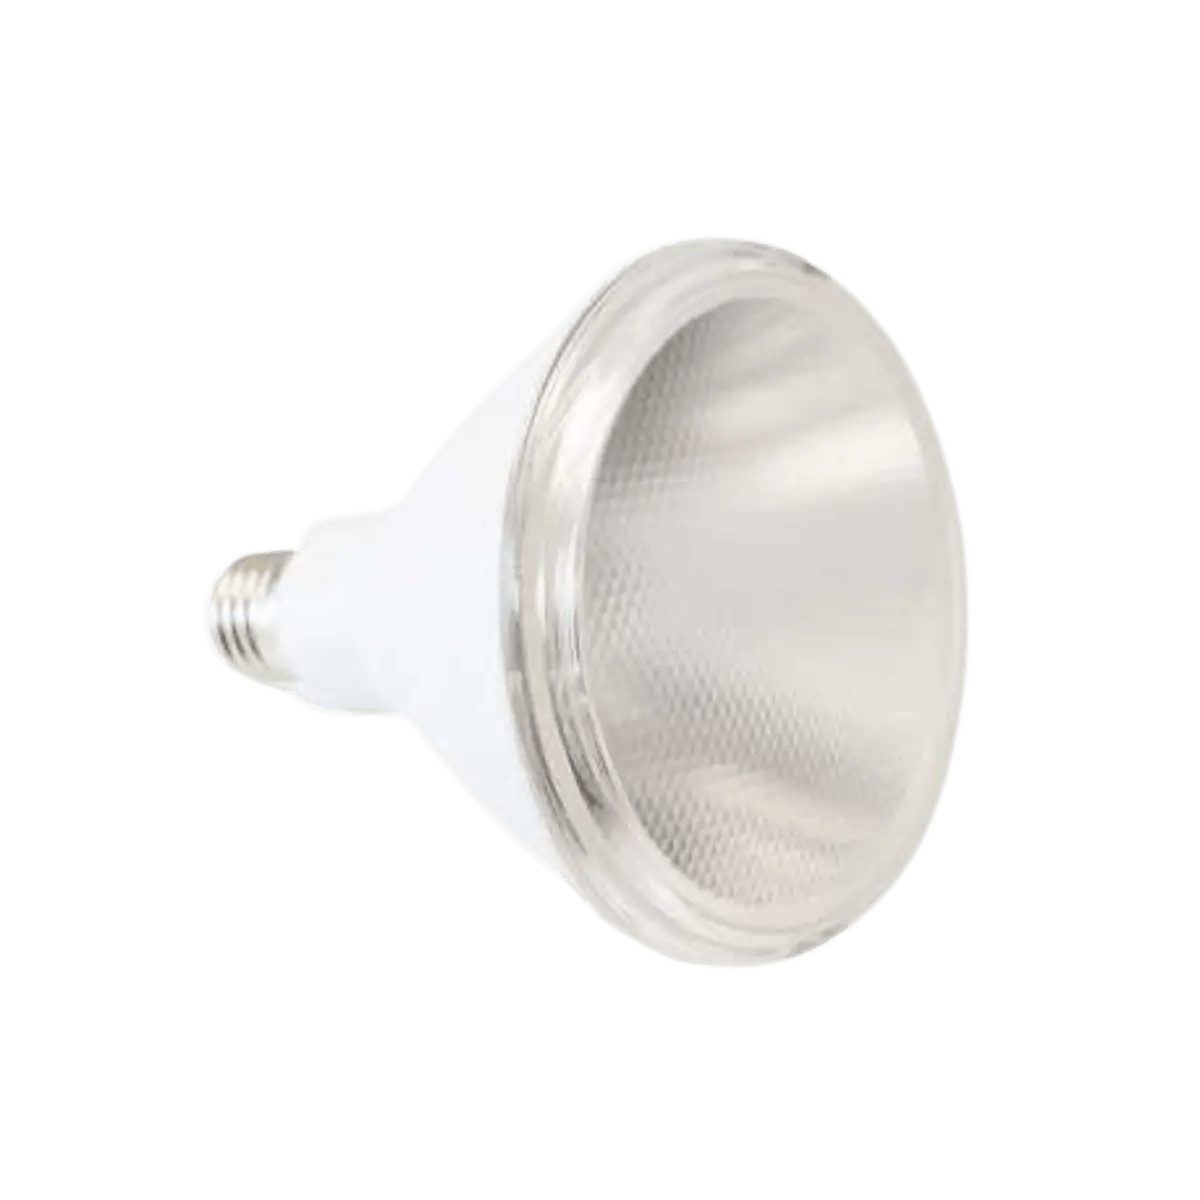 Ampoule LED Globe E27 15W 3000K 